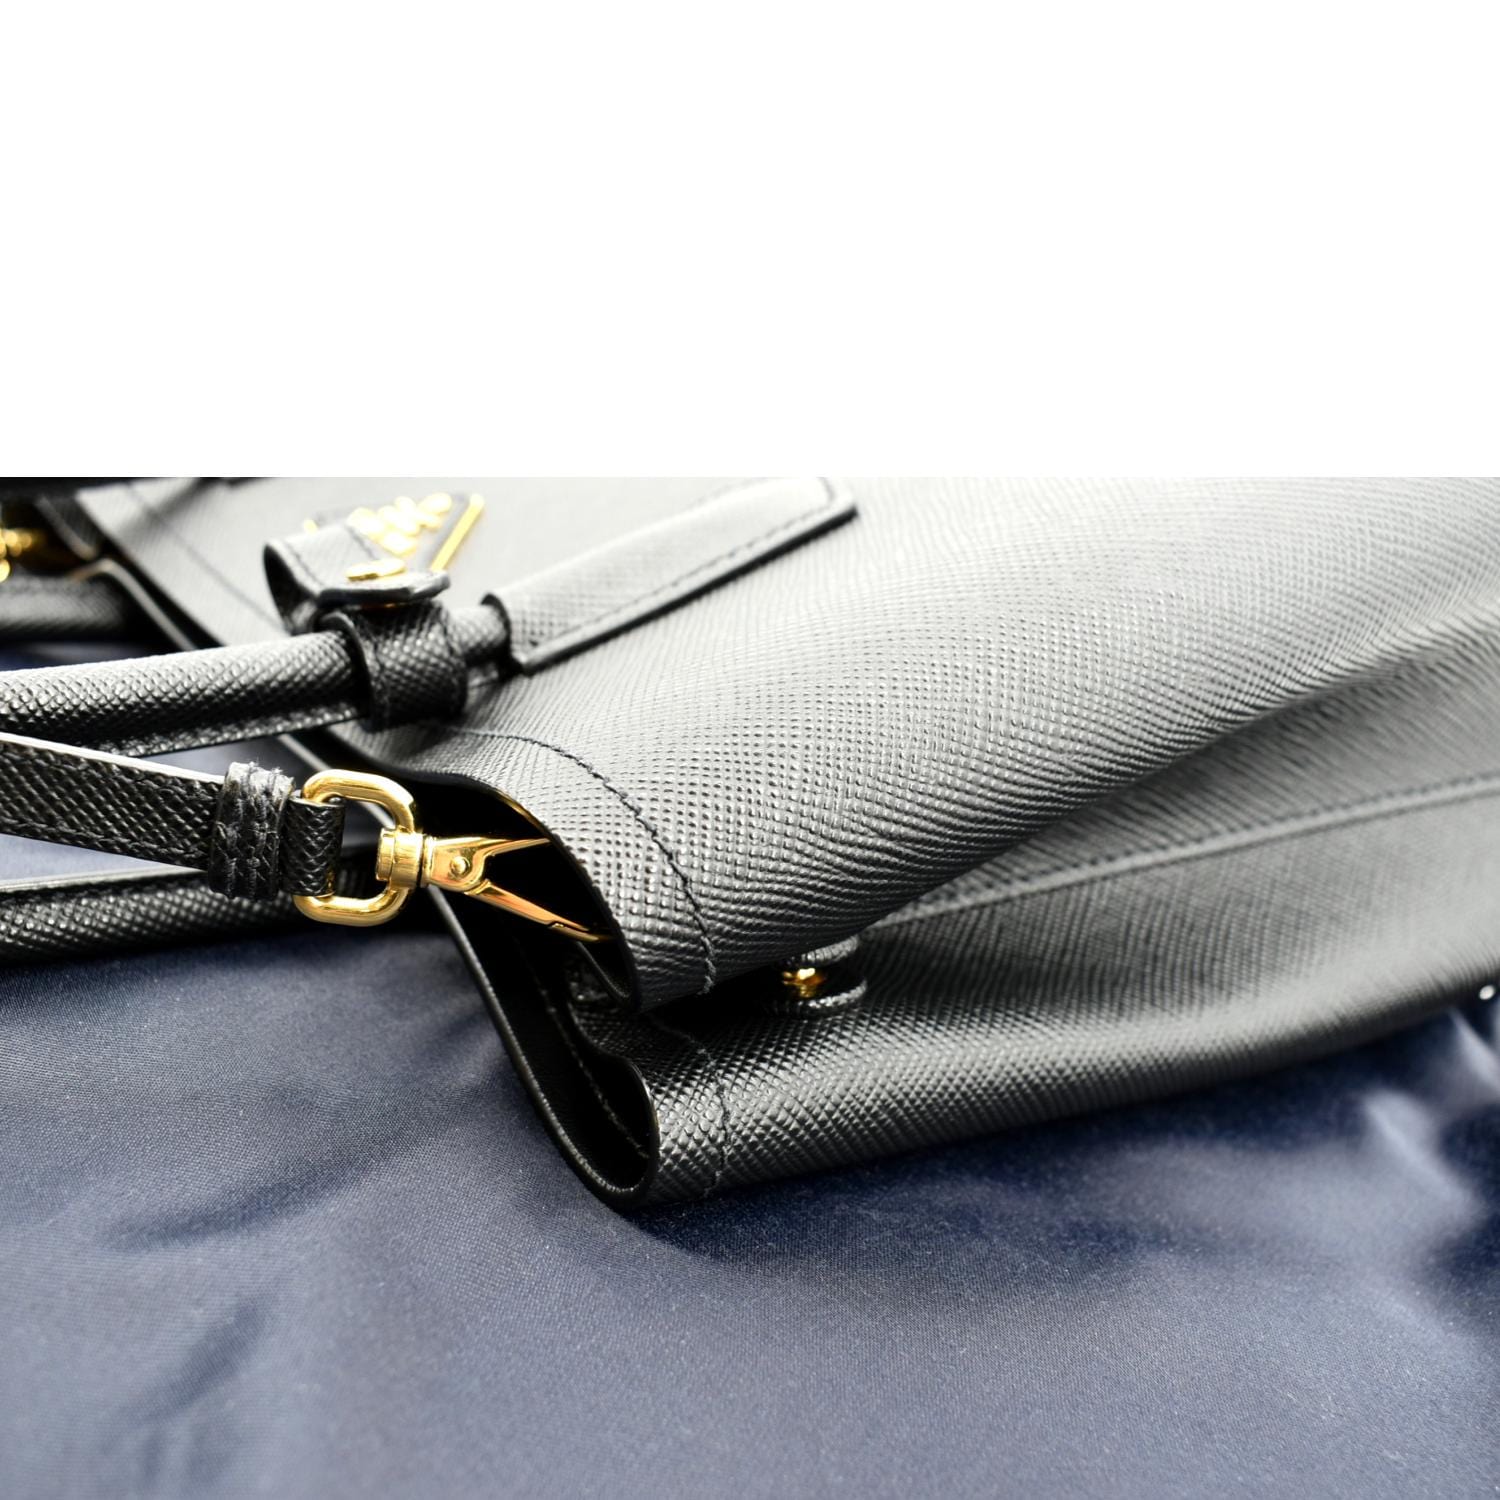 Prada Double Saffiano Leather Tote Bag